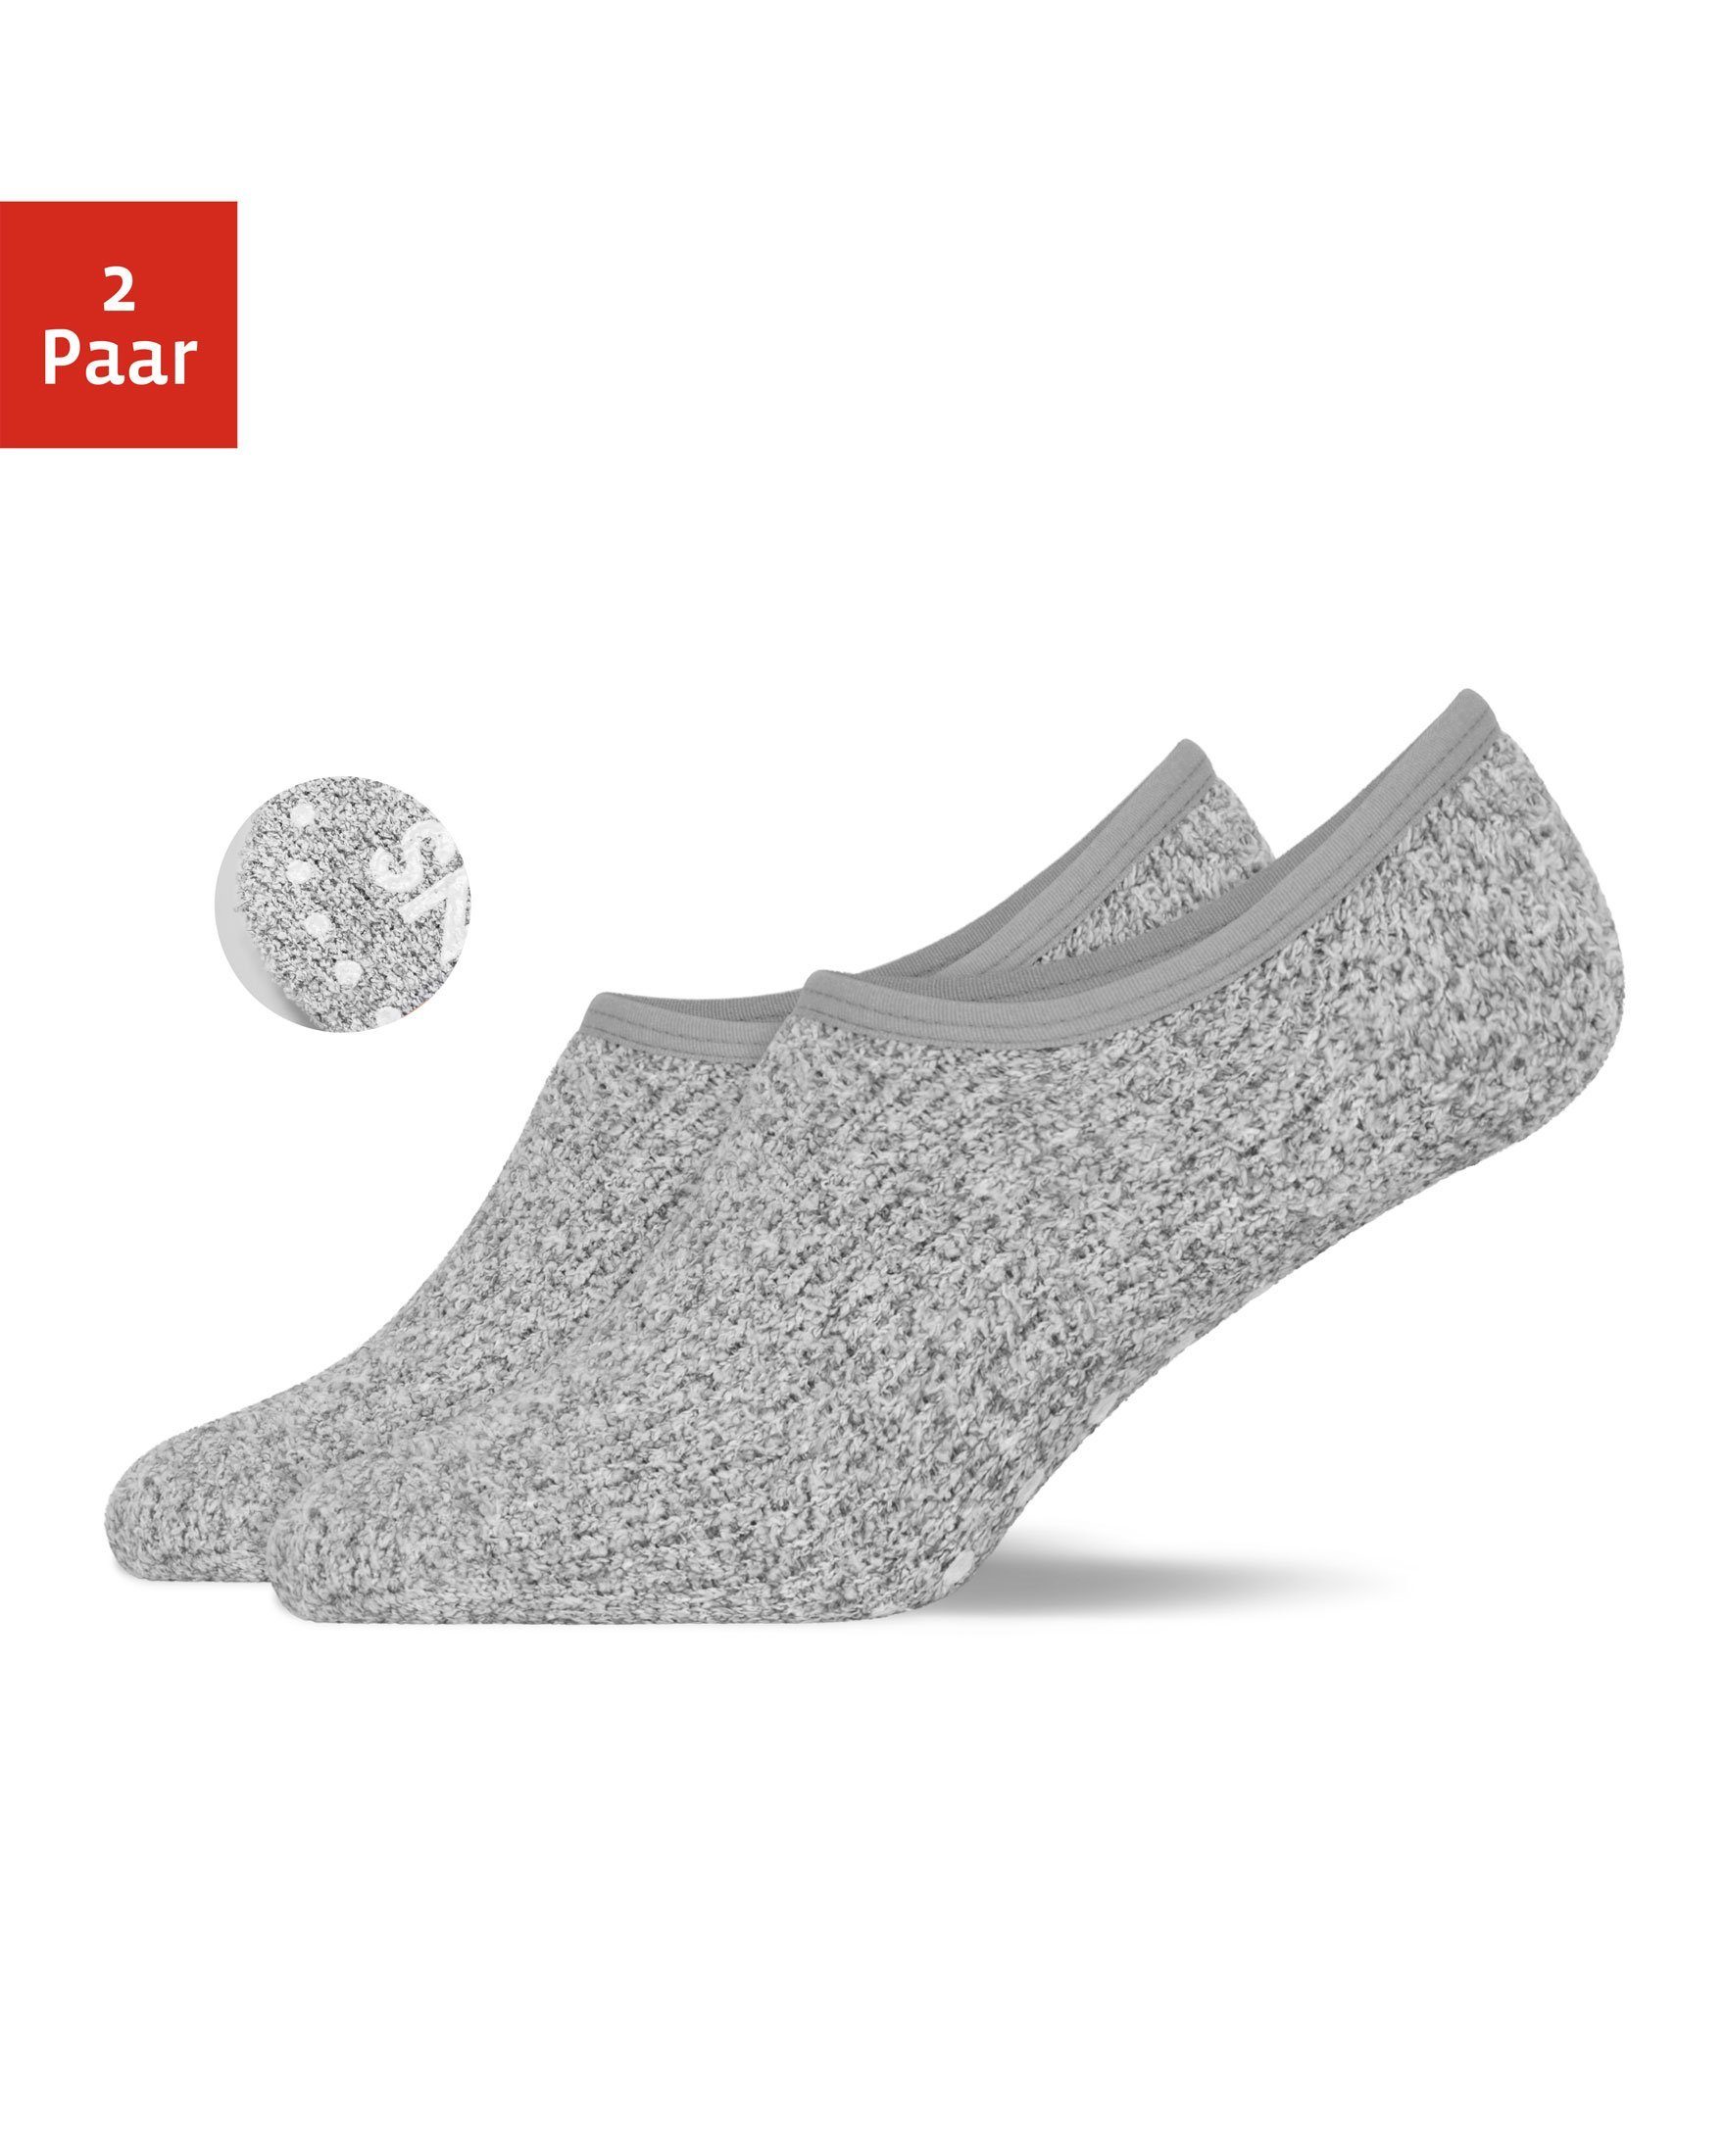 Socks Invisible Socken Füßlinge Sneaker weich den für kuschelig Fluffy Anti-Rutsch-Socken, Winter Herren Grau SNOCKS (2-Paar) Damen